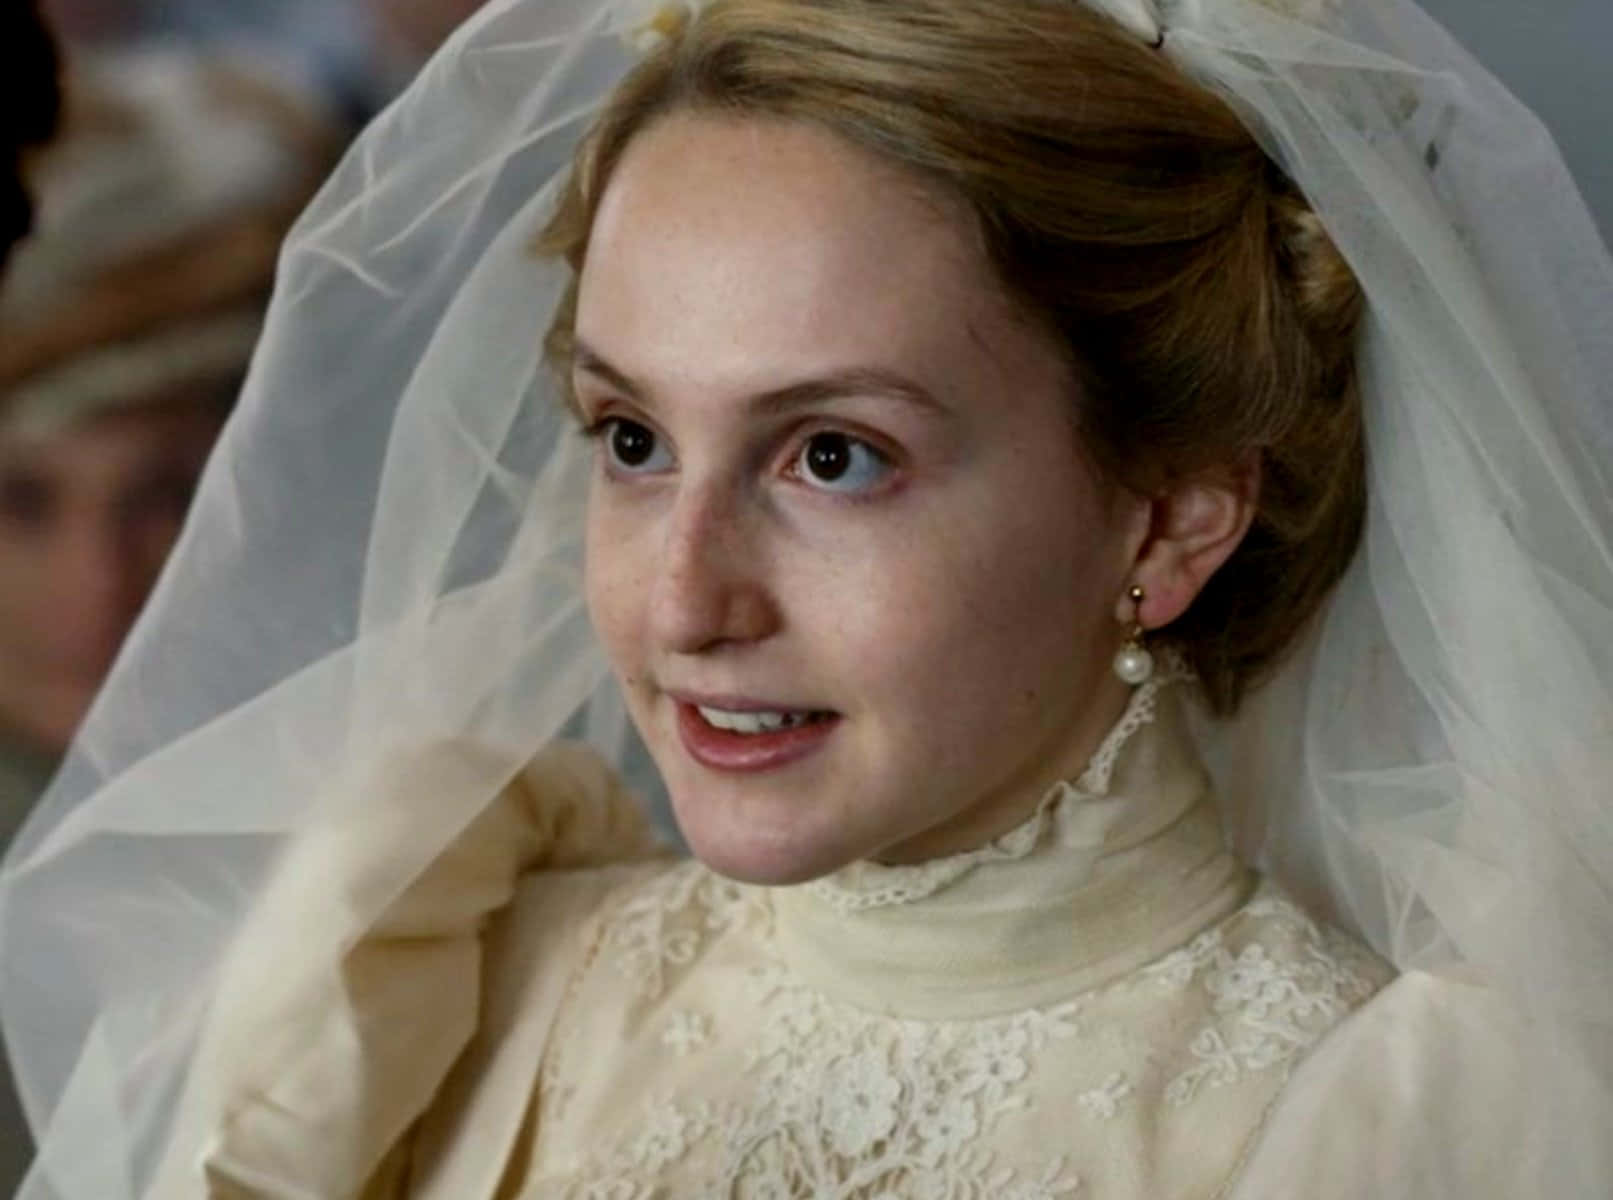 A Woman In A Wedding Dress Is Wearing A Veil